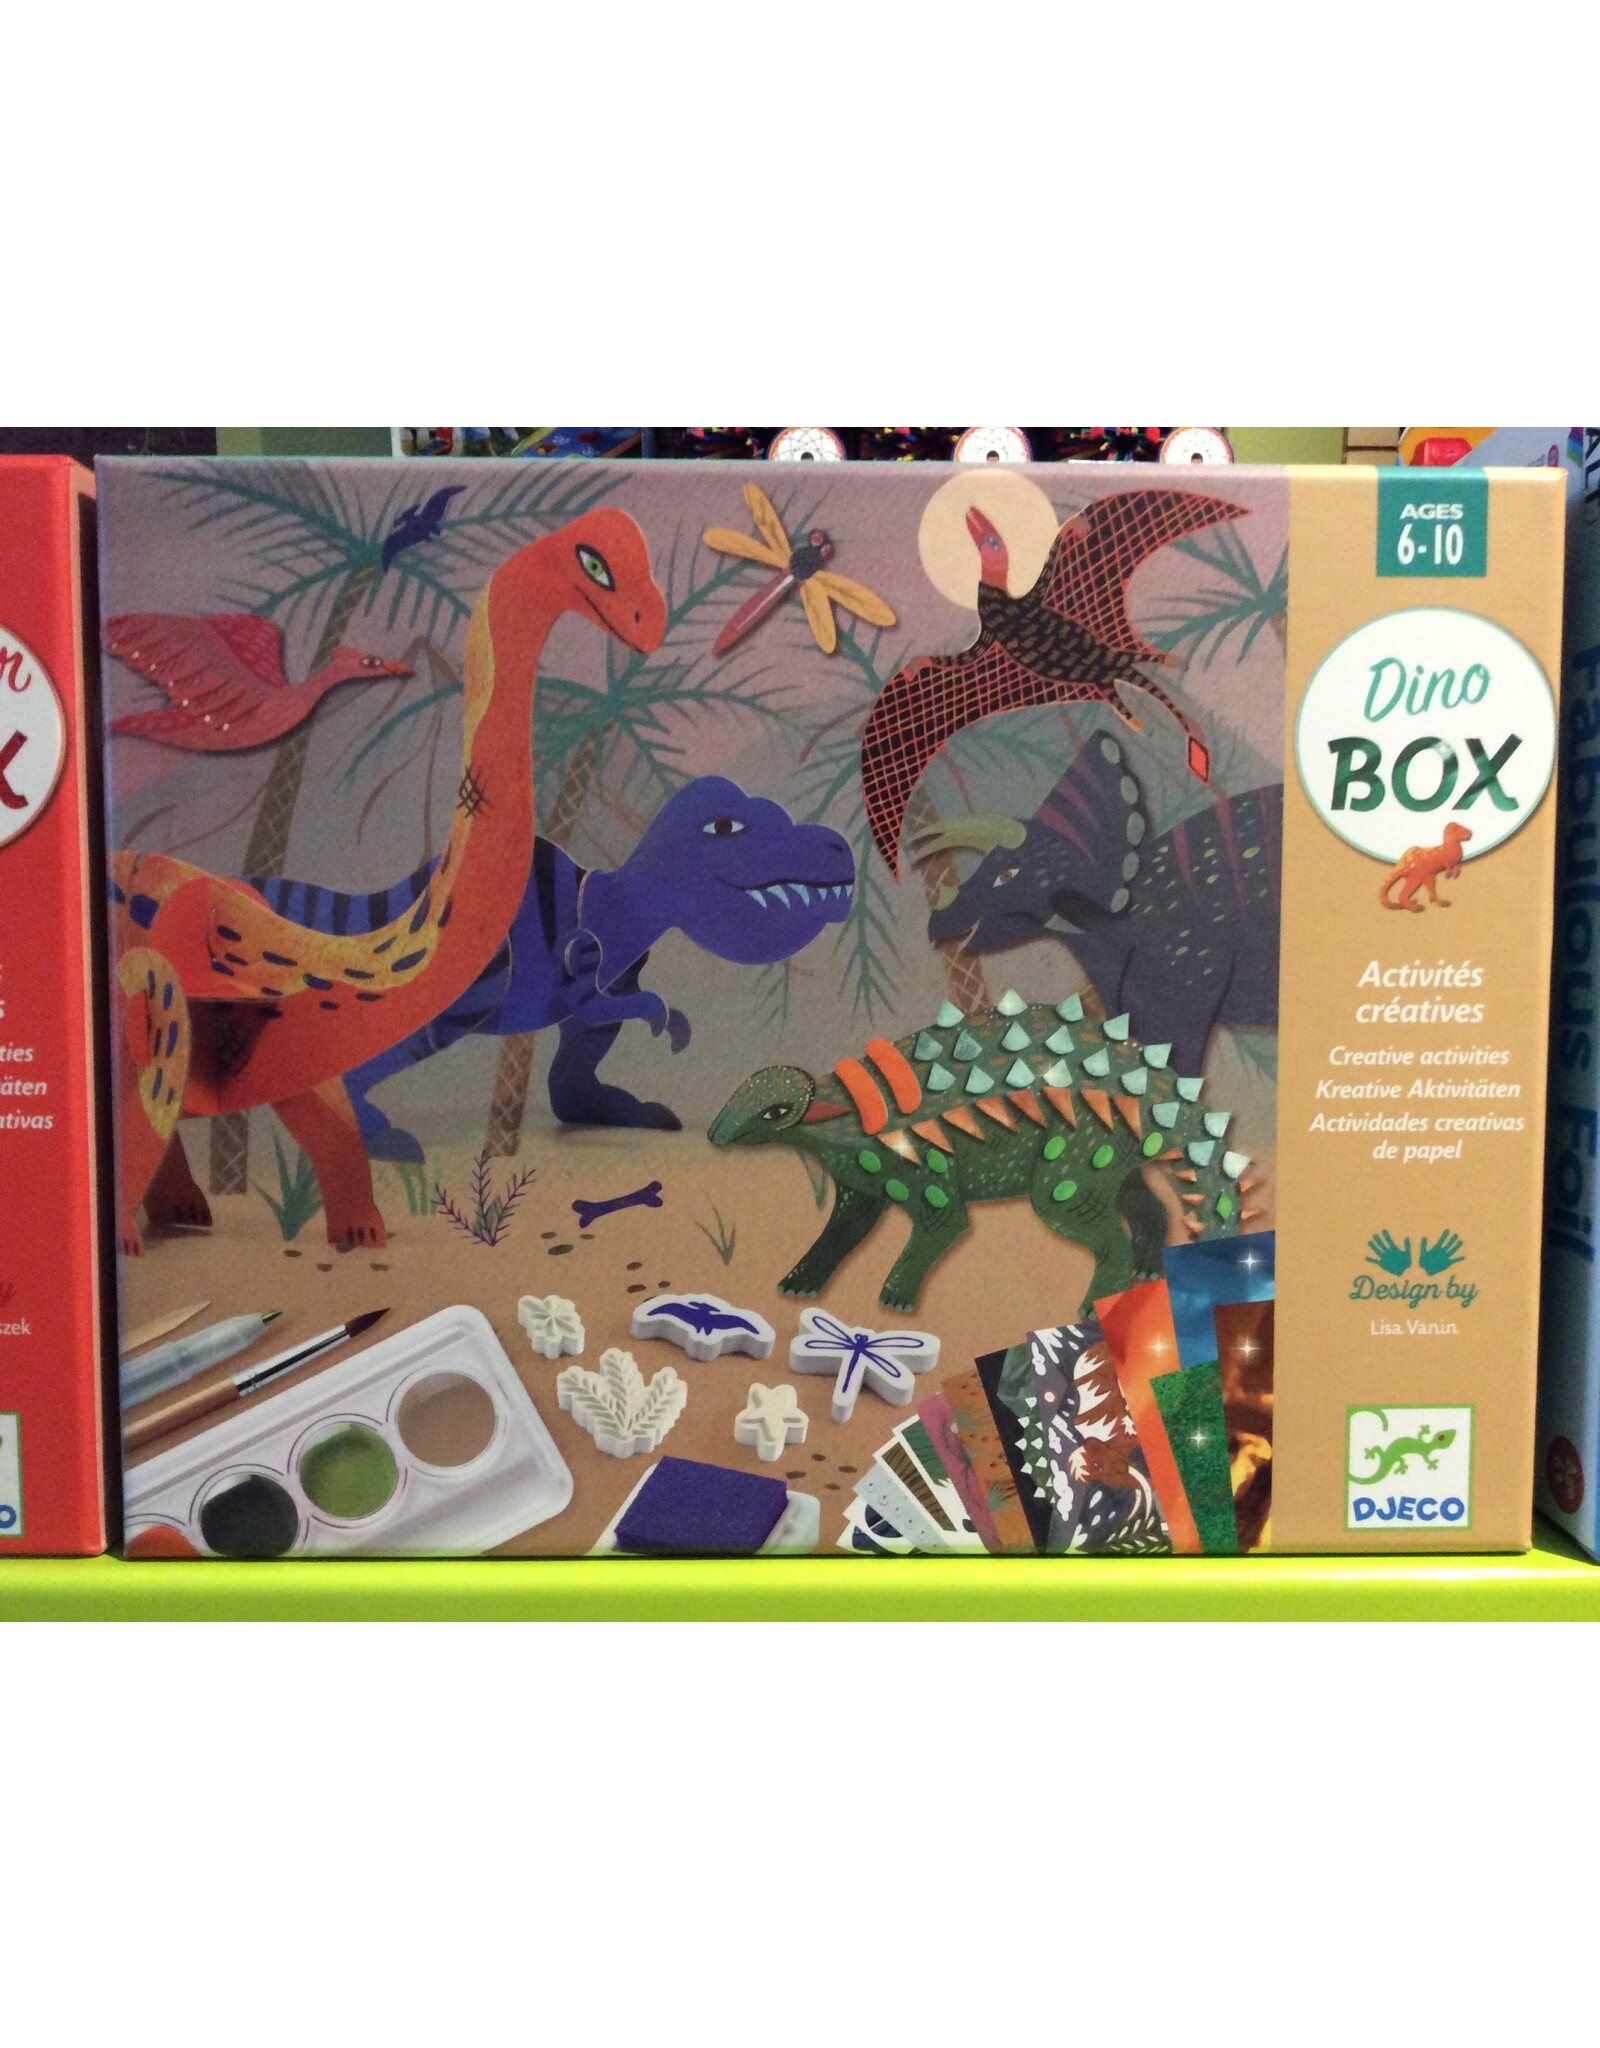 DJECO The World of Dinosaurs Multi-Activity Craft Kit